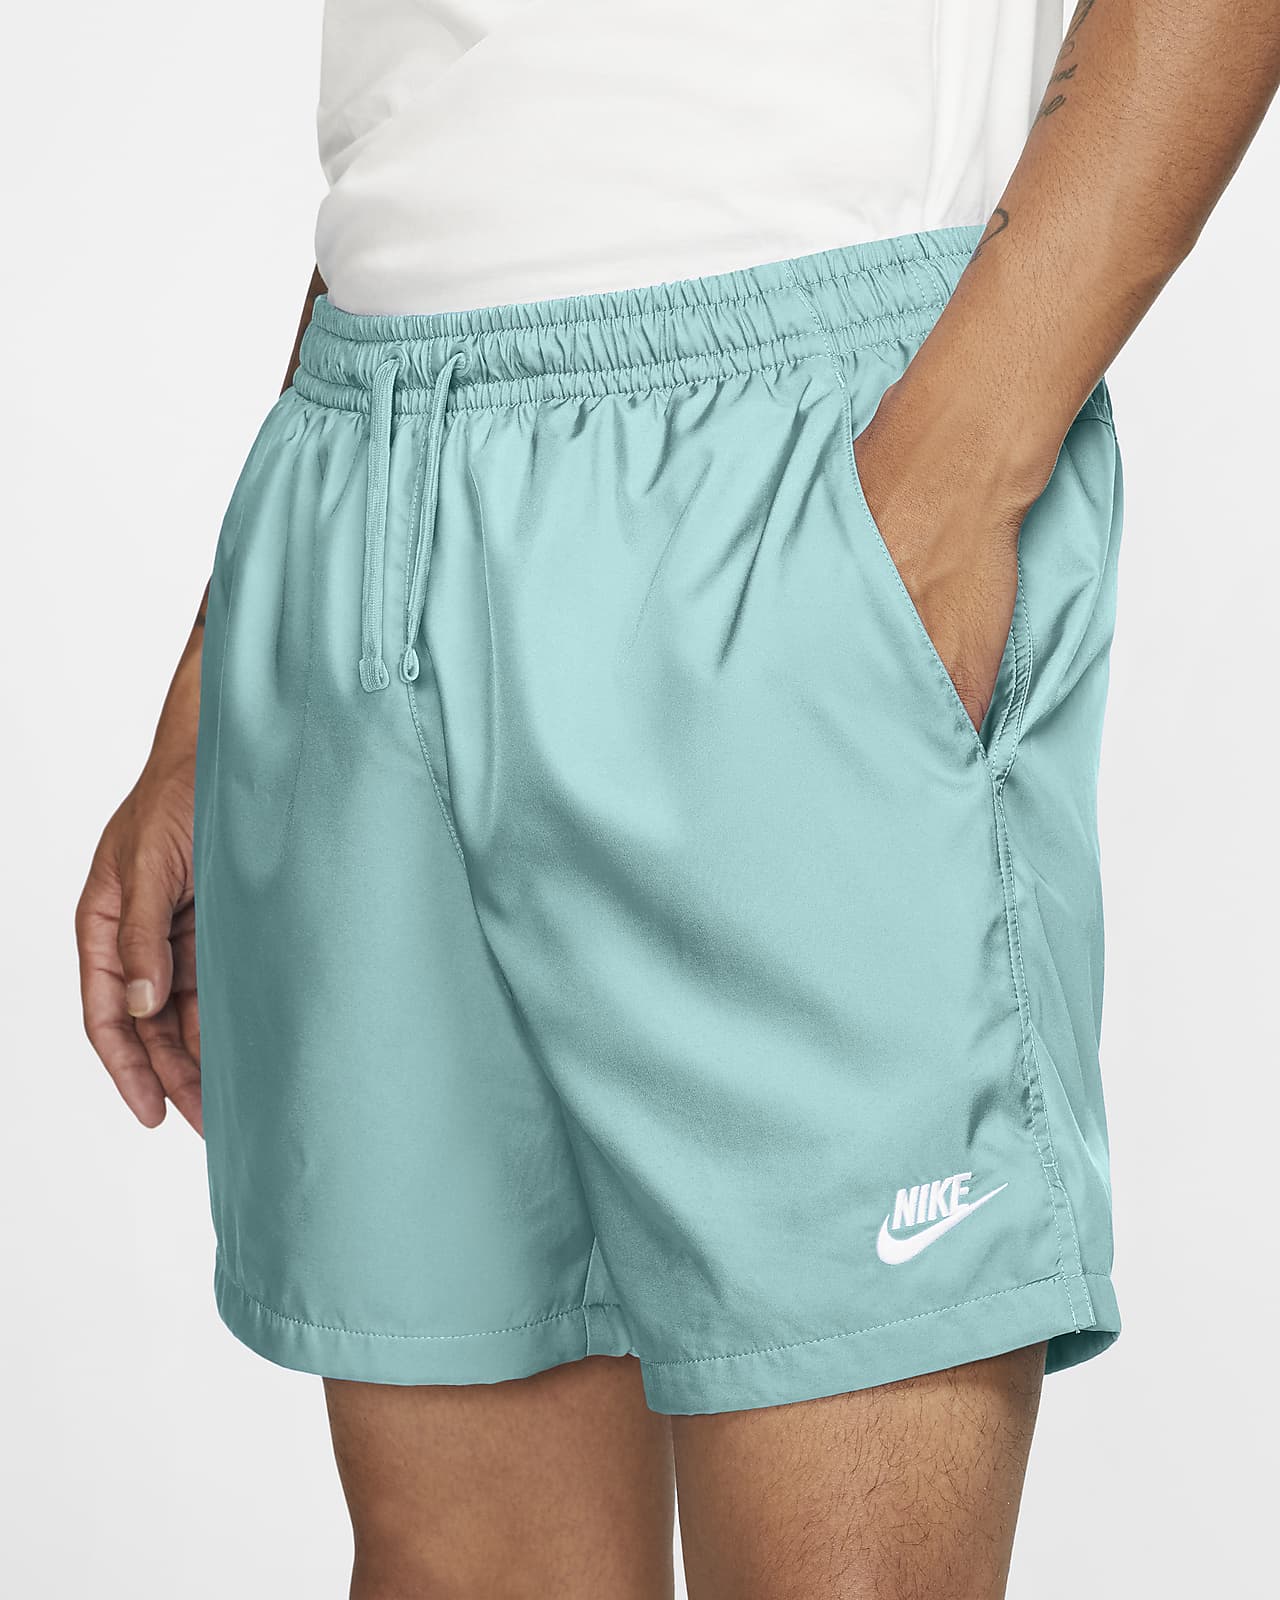 Nike Essential Woven Shorts new Zealand, 45% - horiconphoenix.com